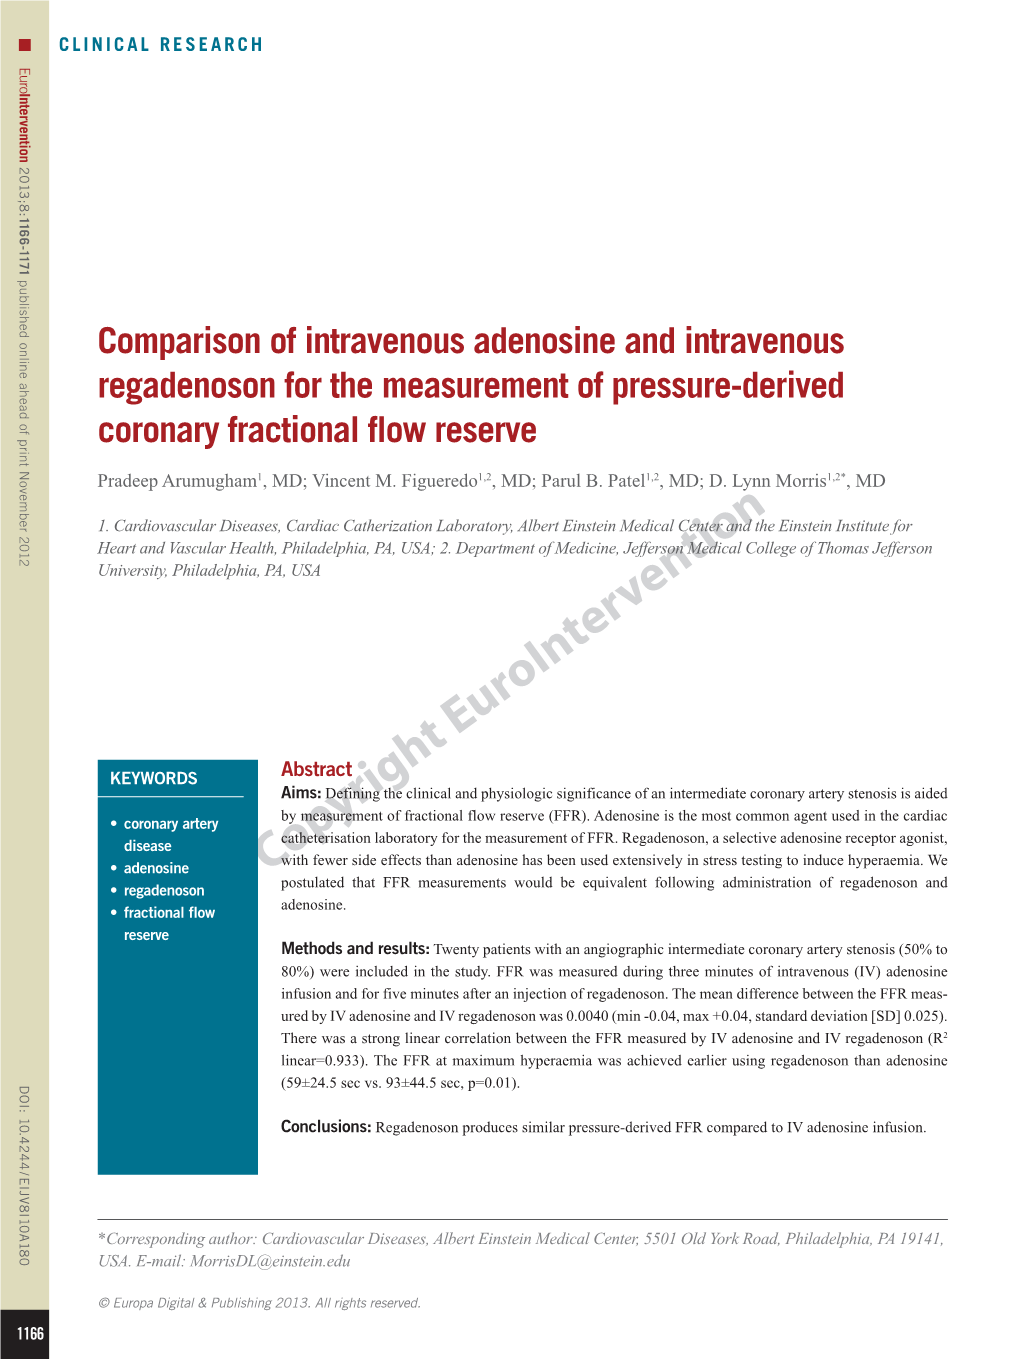 Comparison of Intravenous Adenosine and Intravenous Regadenoson for the Measurement of Pressure-Derived Coronary Fractional Flow Reserve